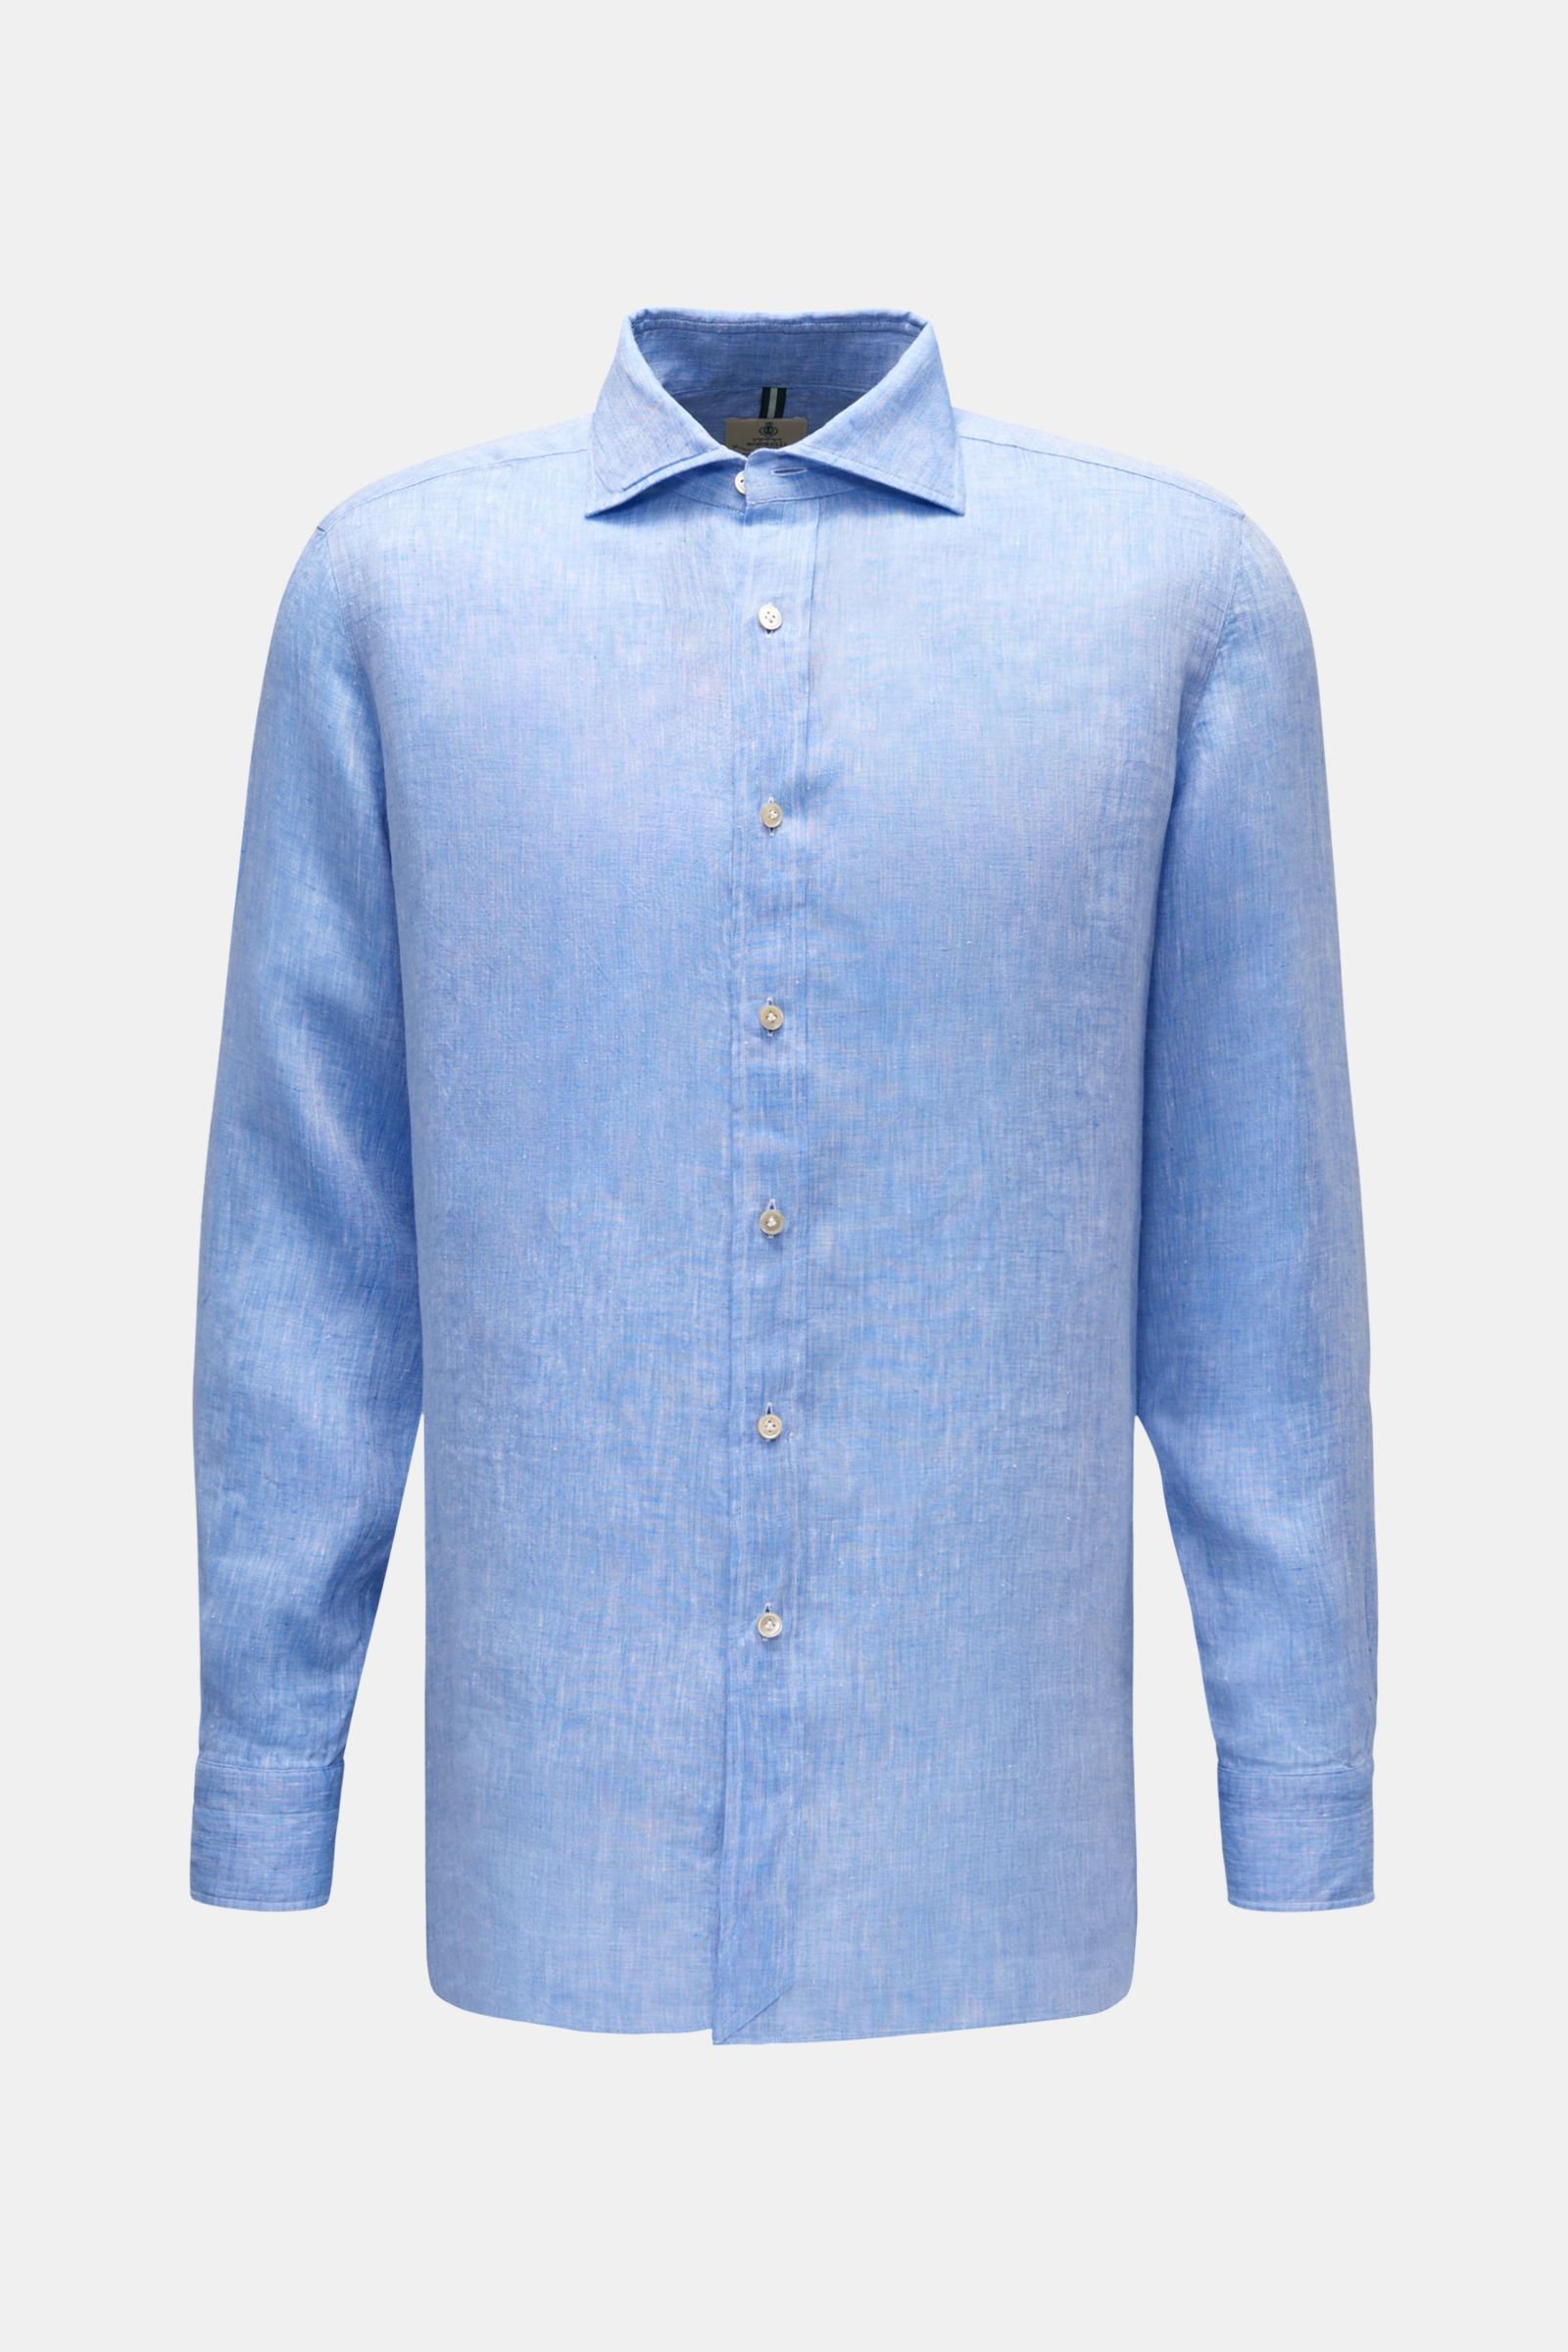 'Nando' linen shirt shark collar smoky blue